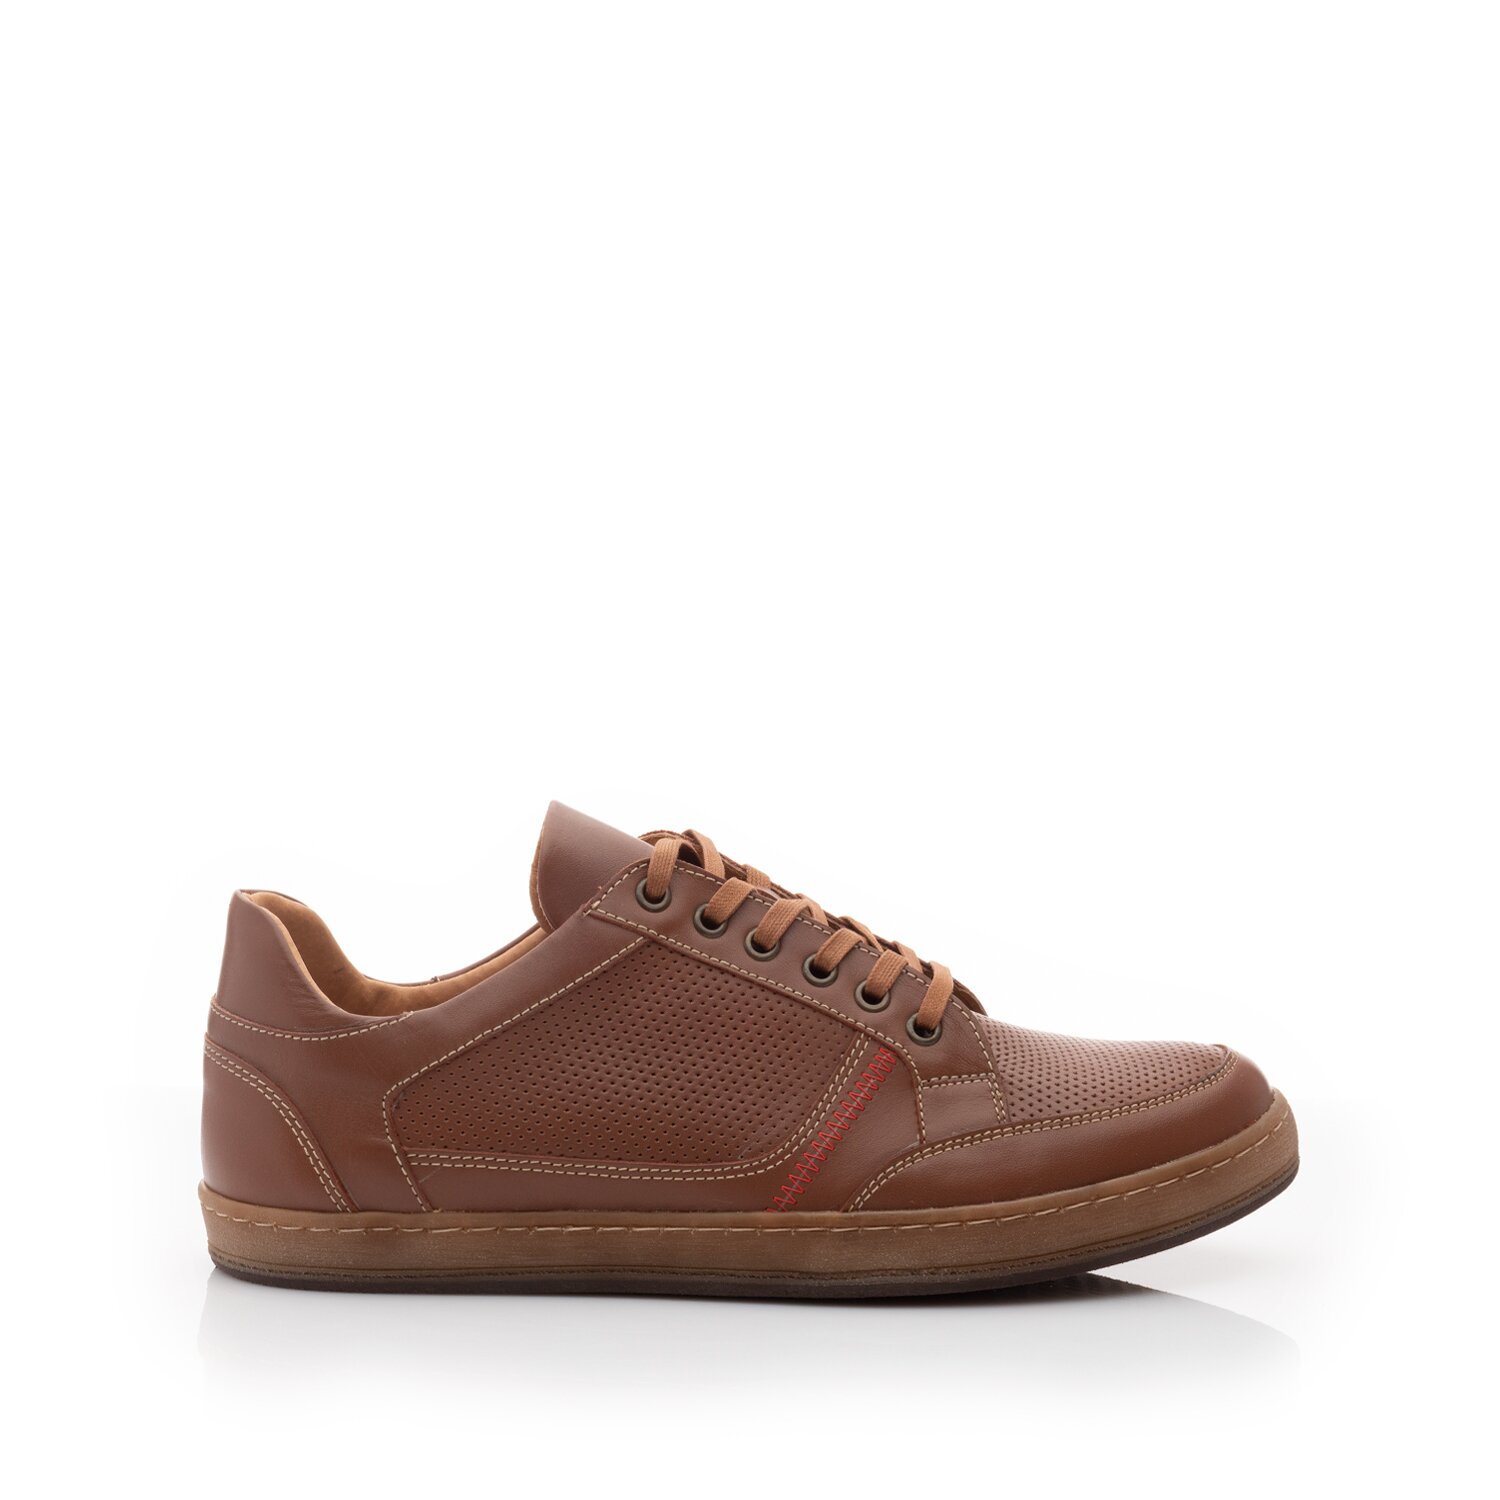 Pantofi casual barbati din piele naturala, Leofex - 854 cognac box